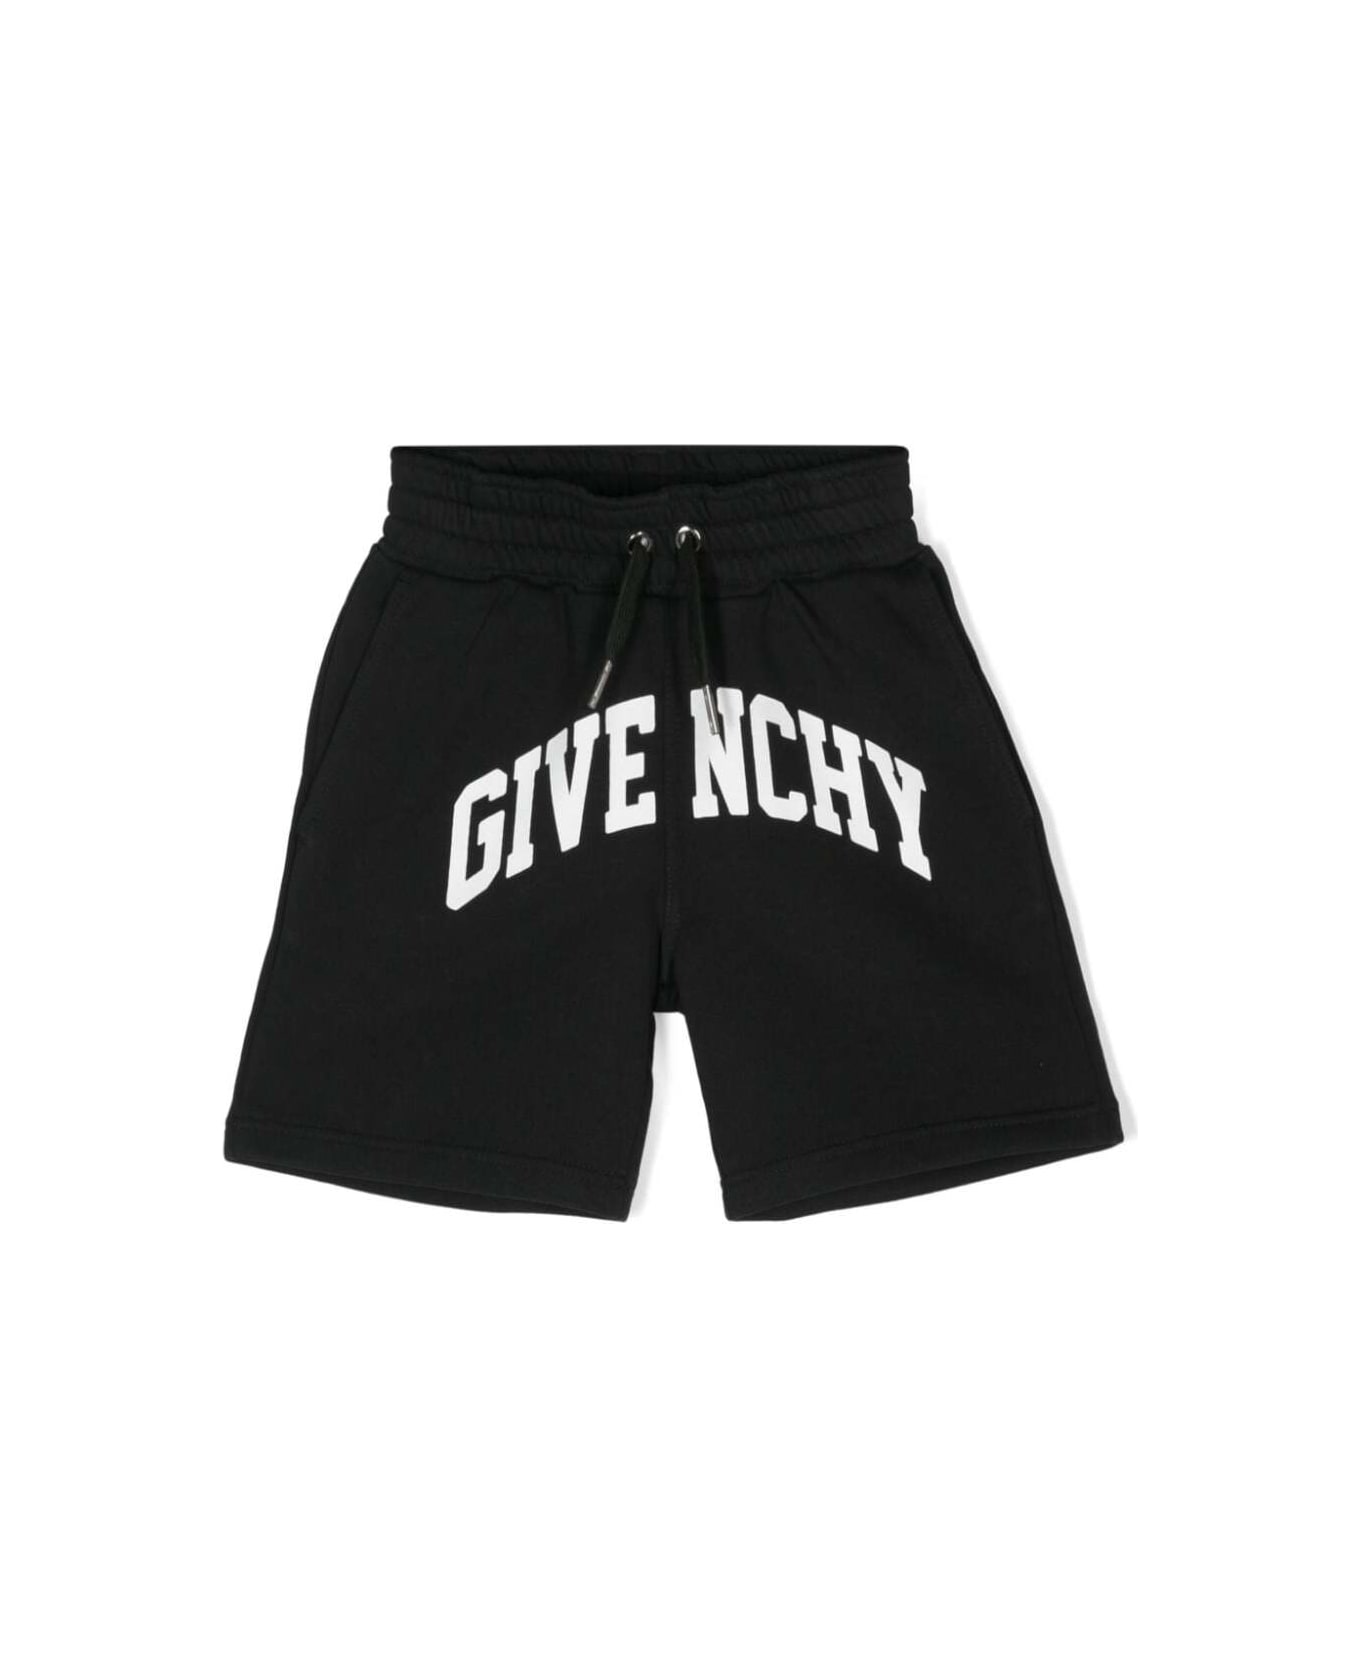 Givenchy H3013709b - Nero